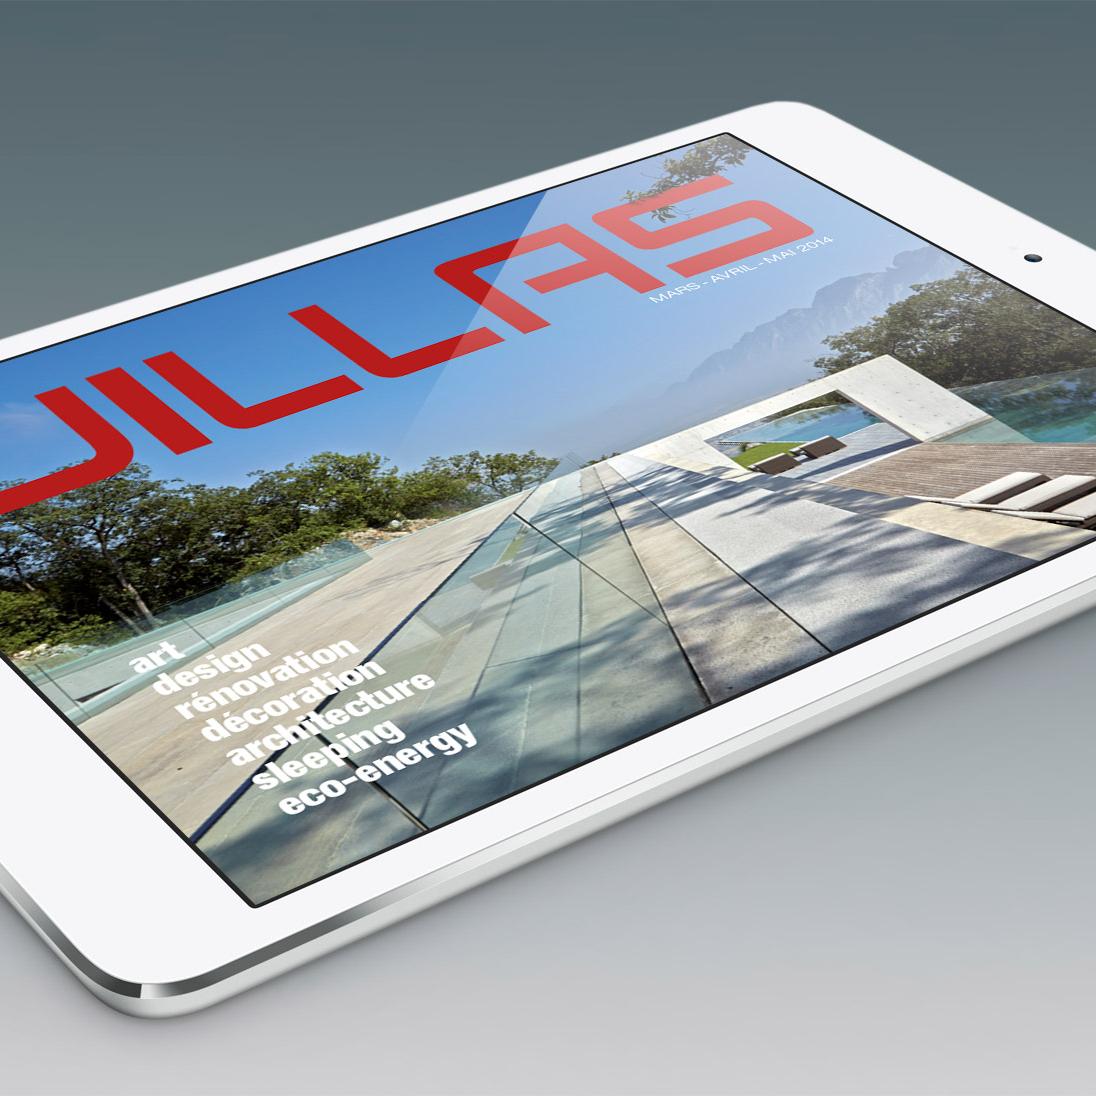 Villas iPad